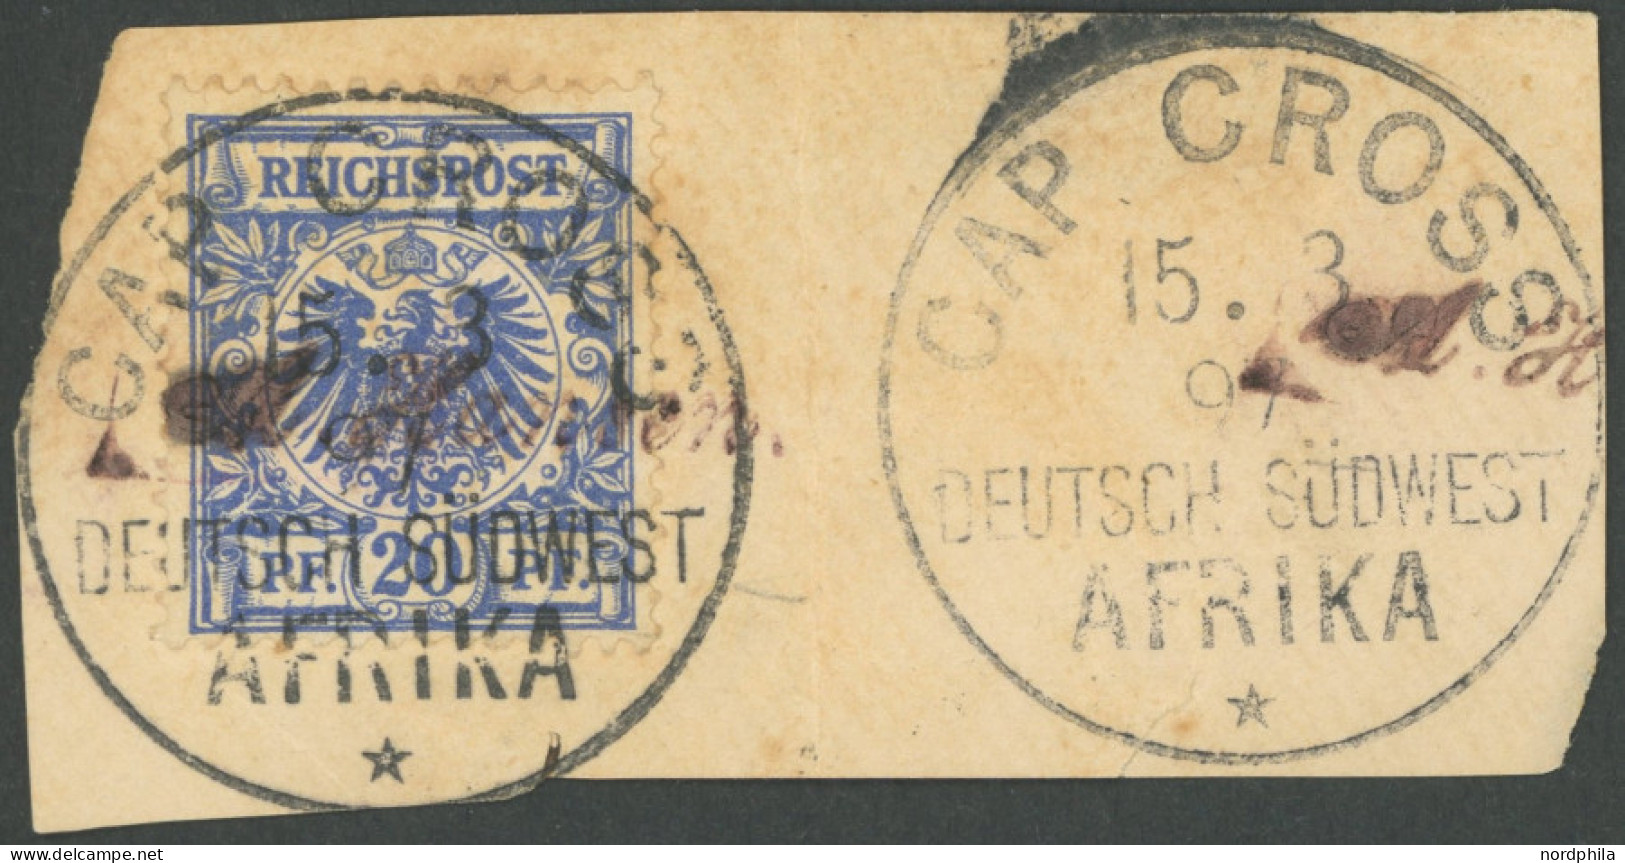 DSWA VS 48d BrfStk, 1897, 20 Pf. Violettultramarin Mit Stempel CAP CROSS Auf Briefstück, Fleckig, Fein - Sud-Ouest Africain Allemand